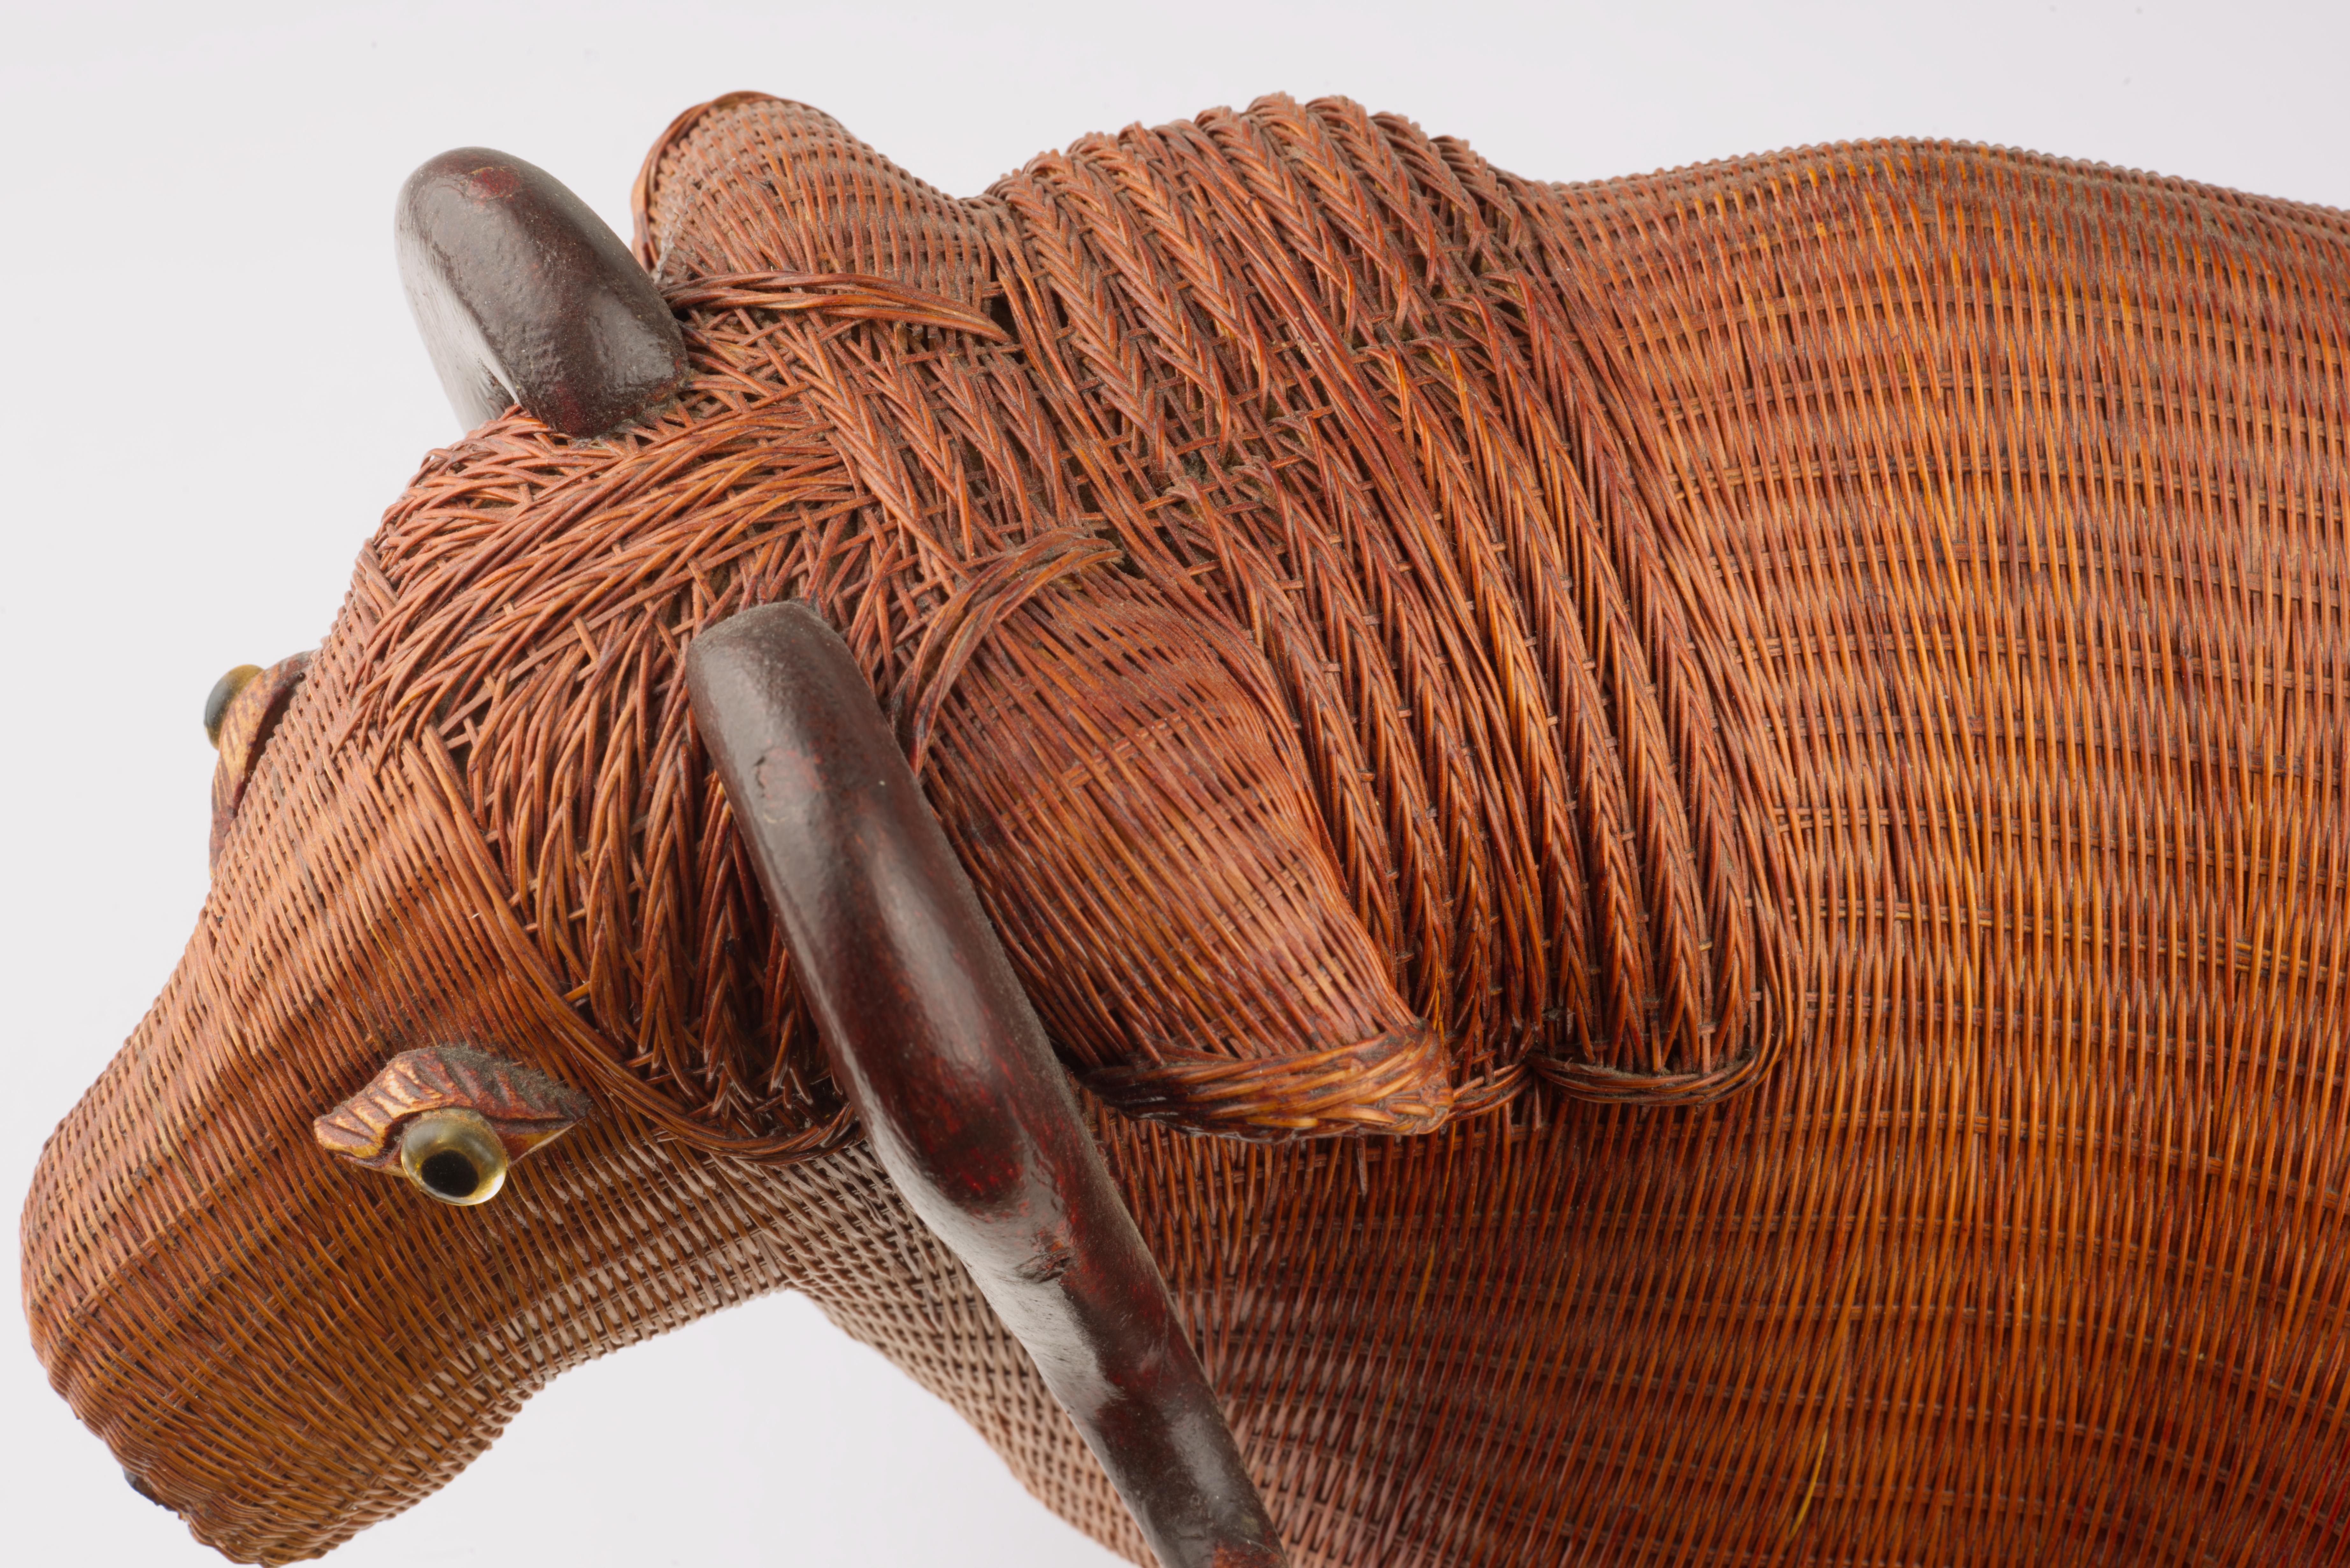 Wicker Water Buffalo Figurine by Shanghai Handicrafts For Sale 3